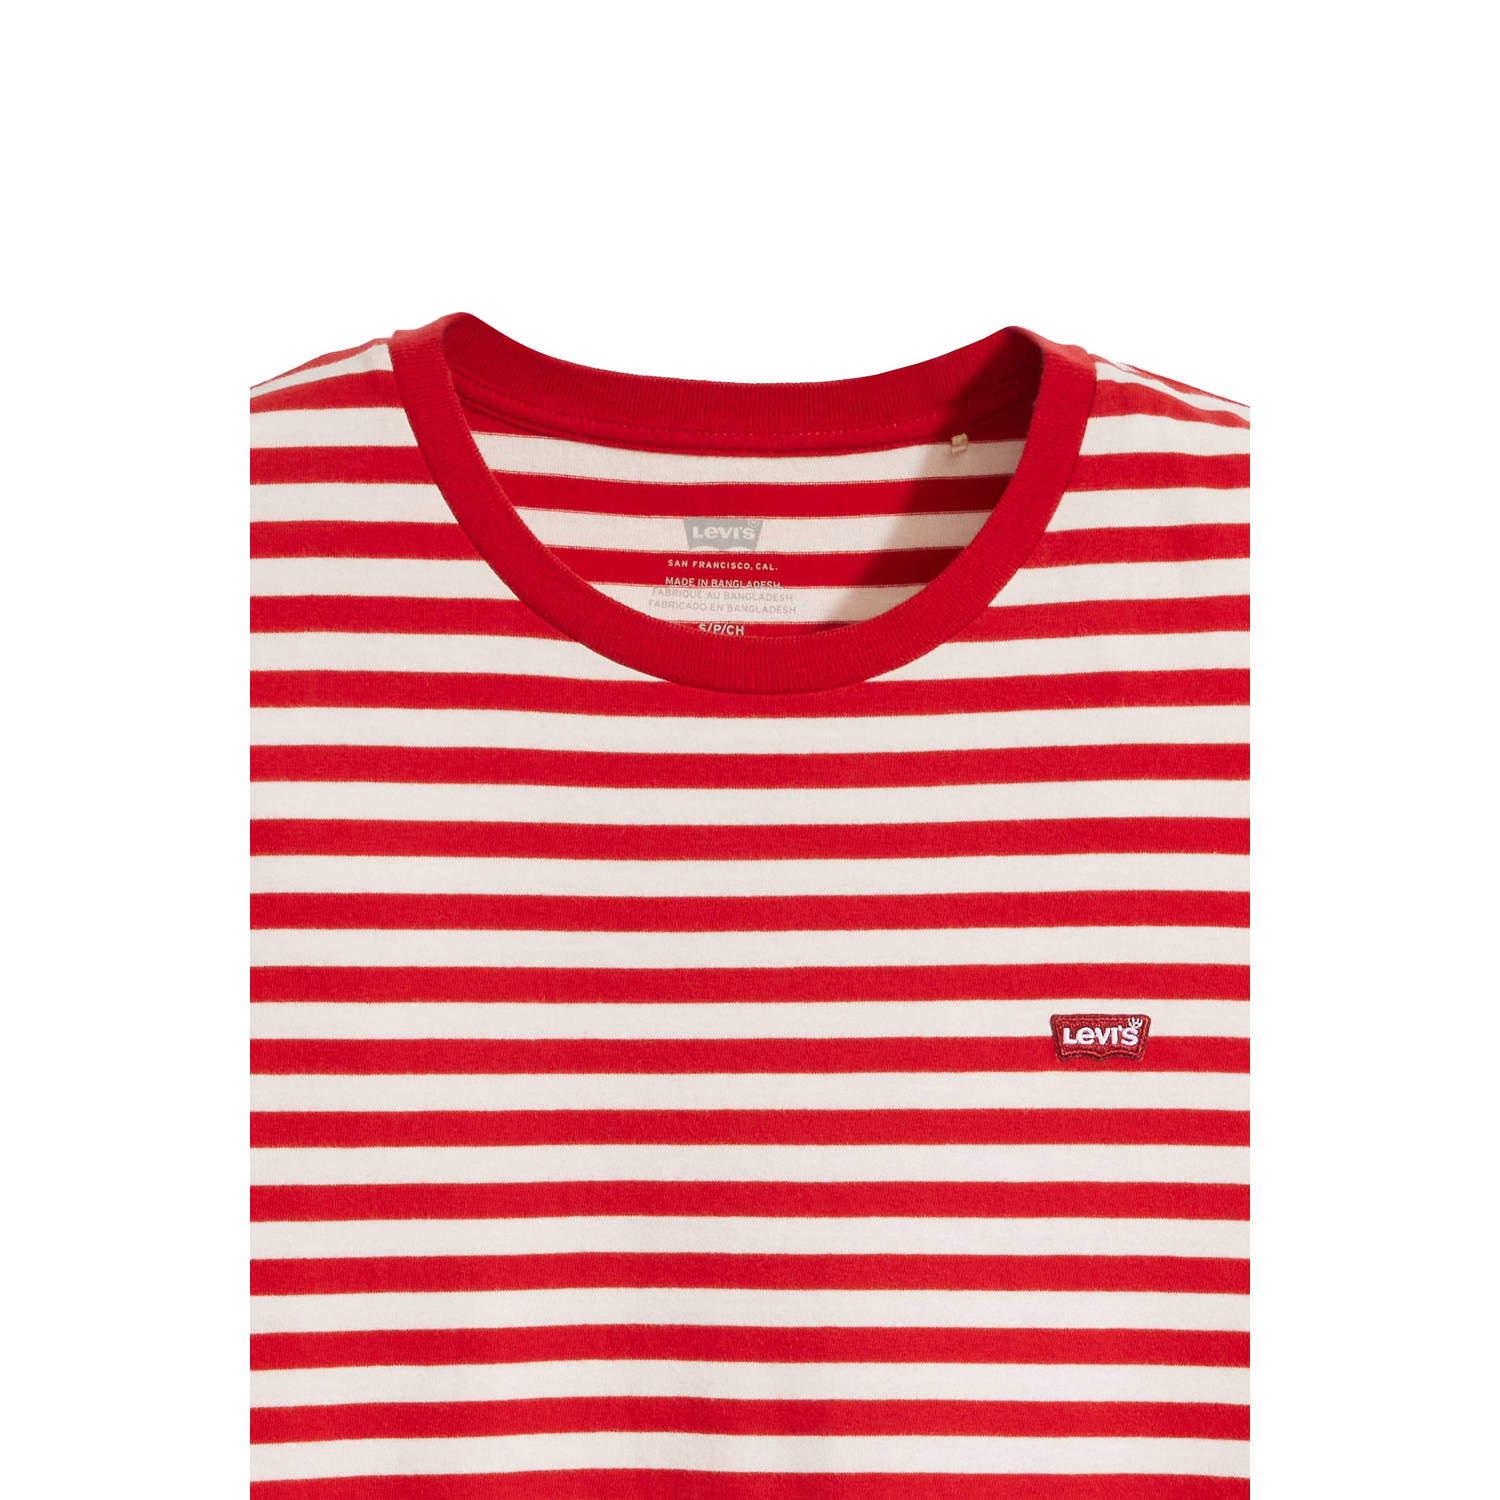 Levi's gestreept T-shirt rood wit